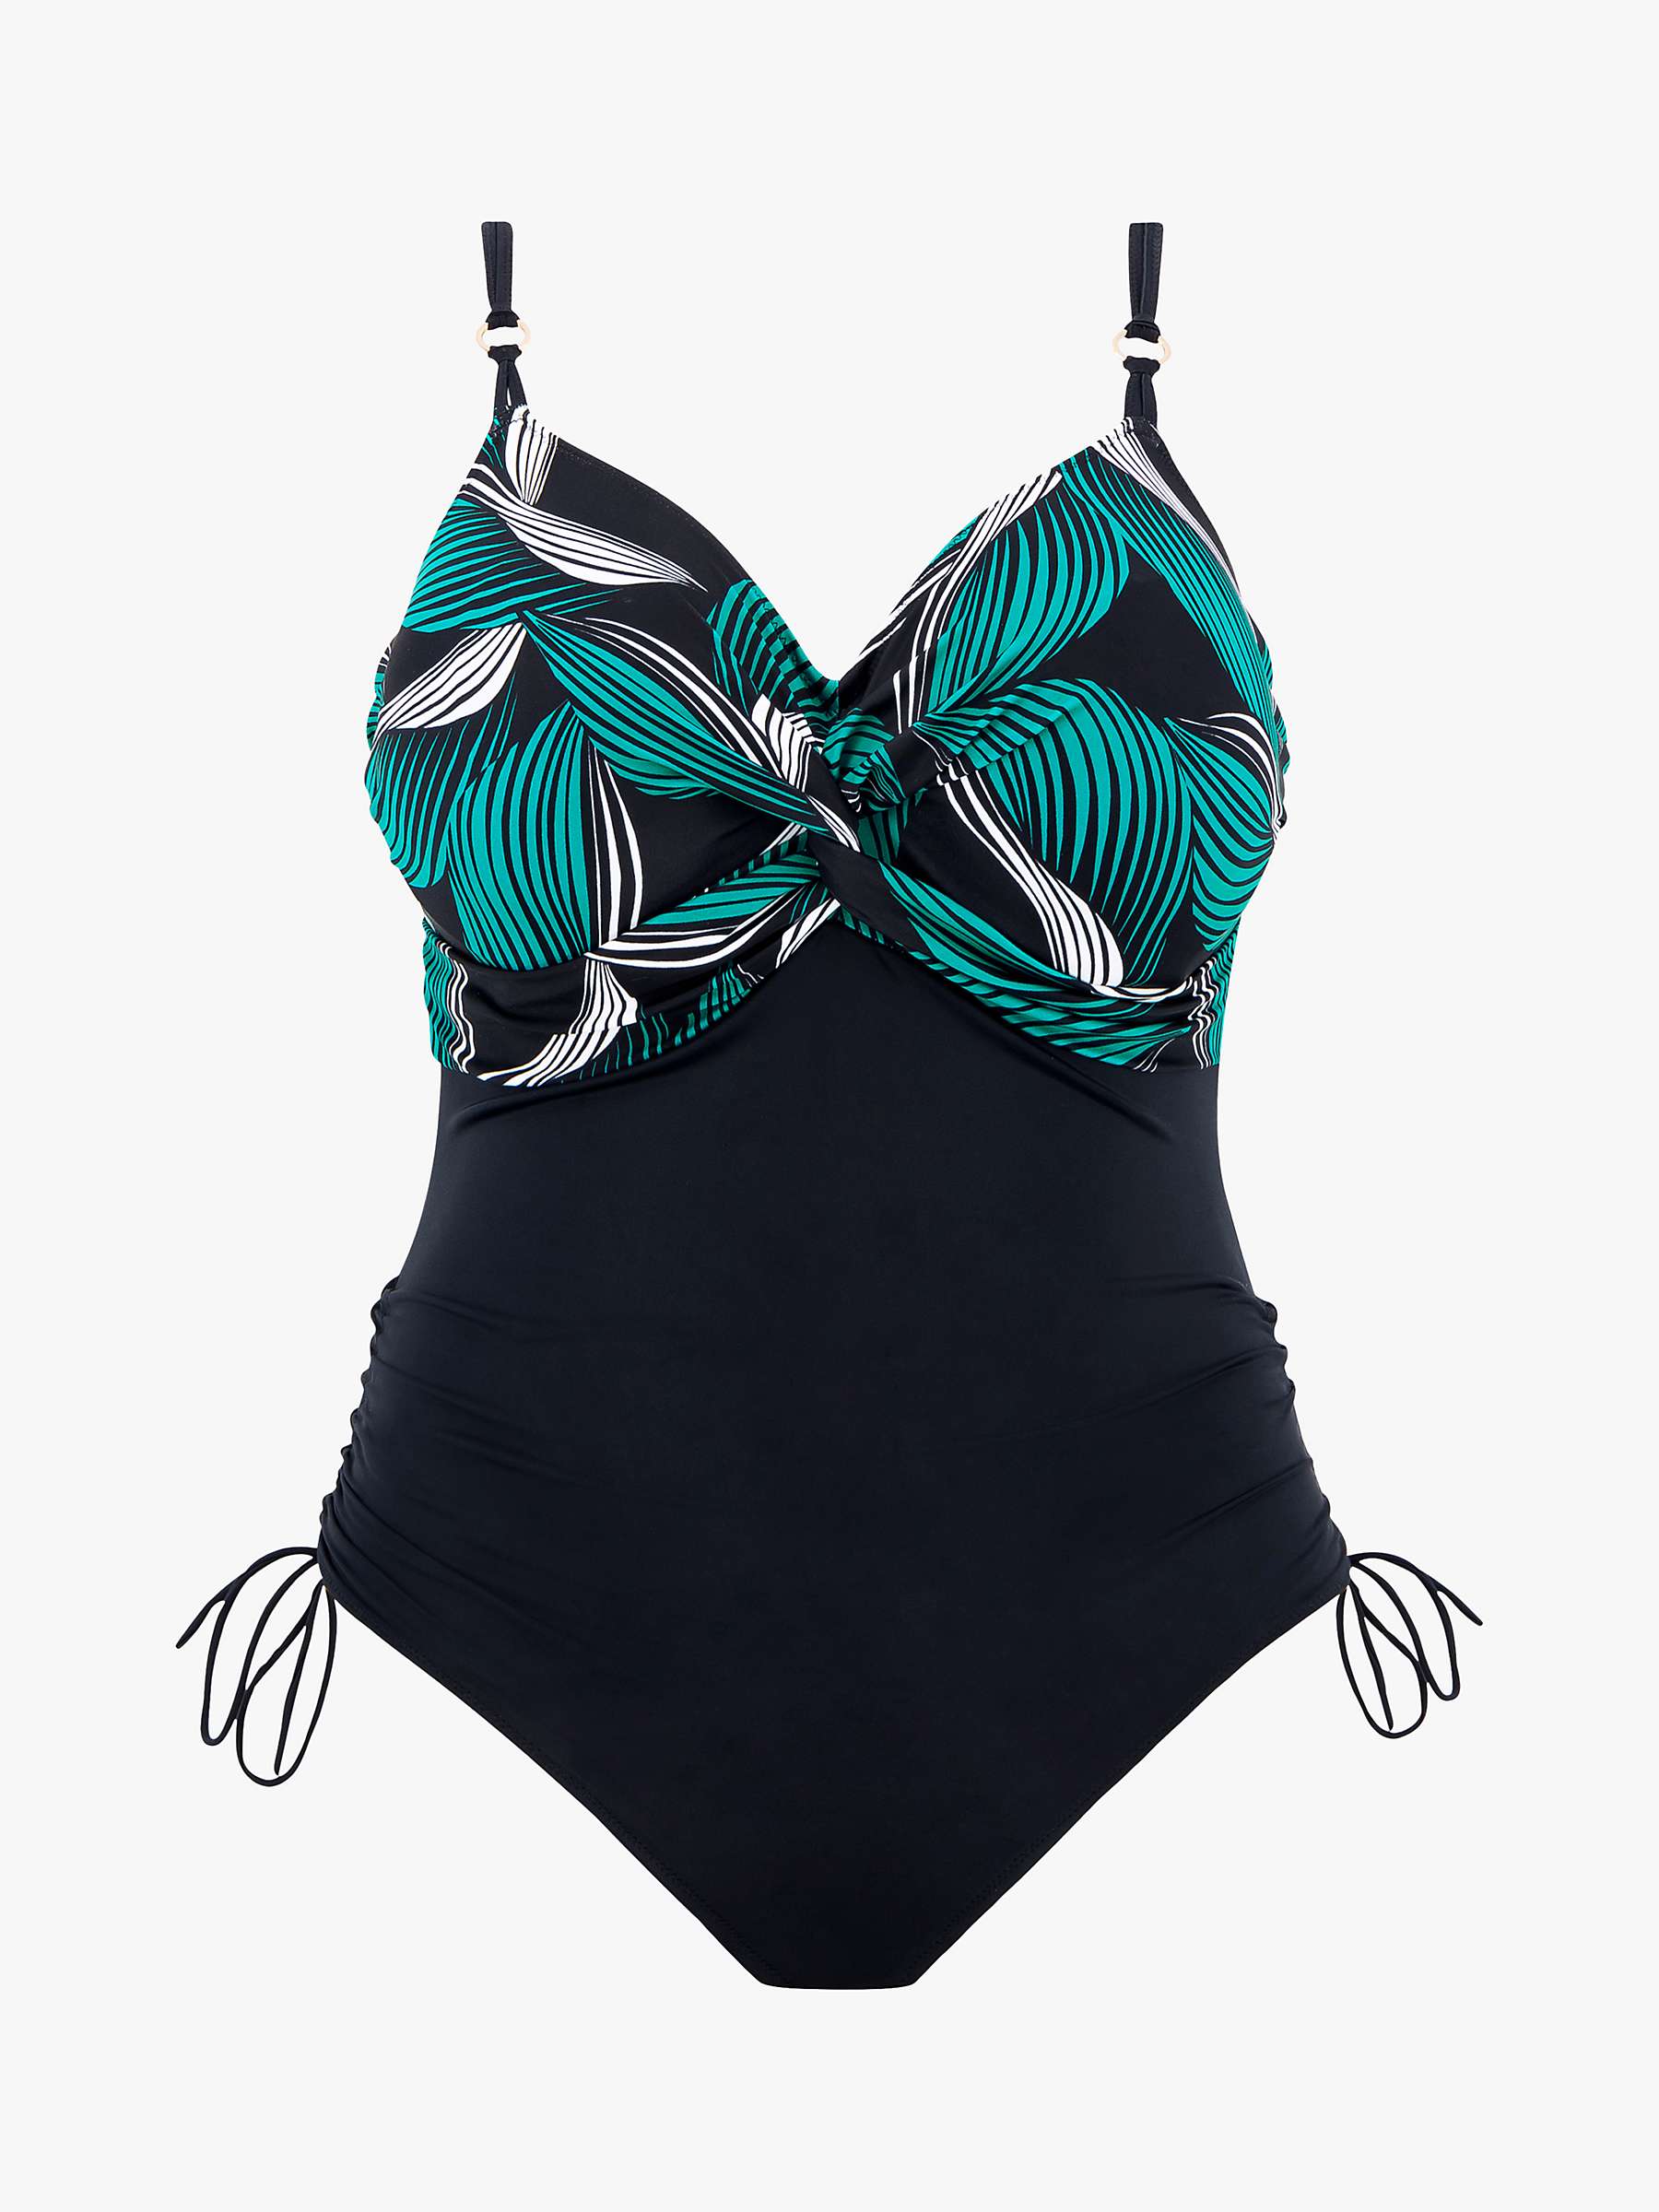 Buy Fantasie Saint Lucia Twist Front Underwired Swimsuit, Black Online at johnlewis.com